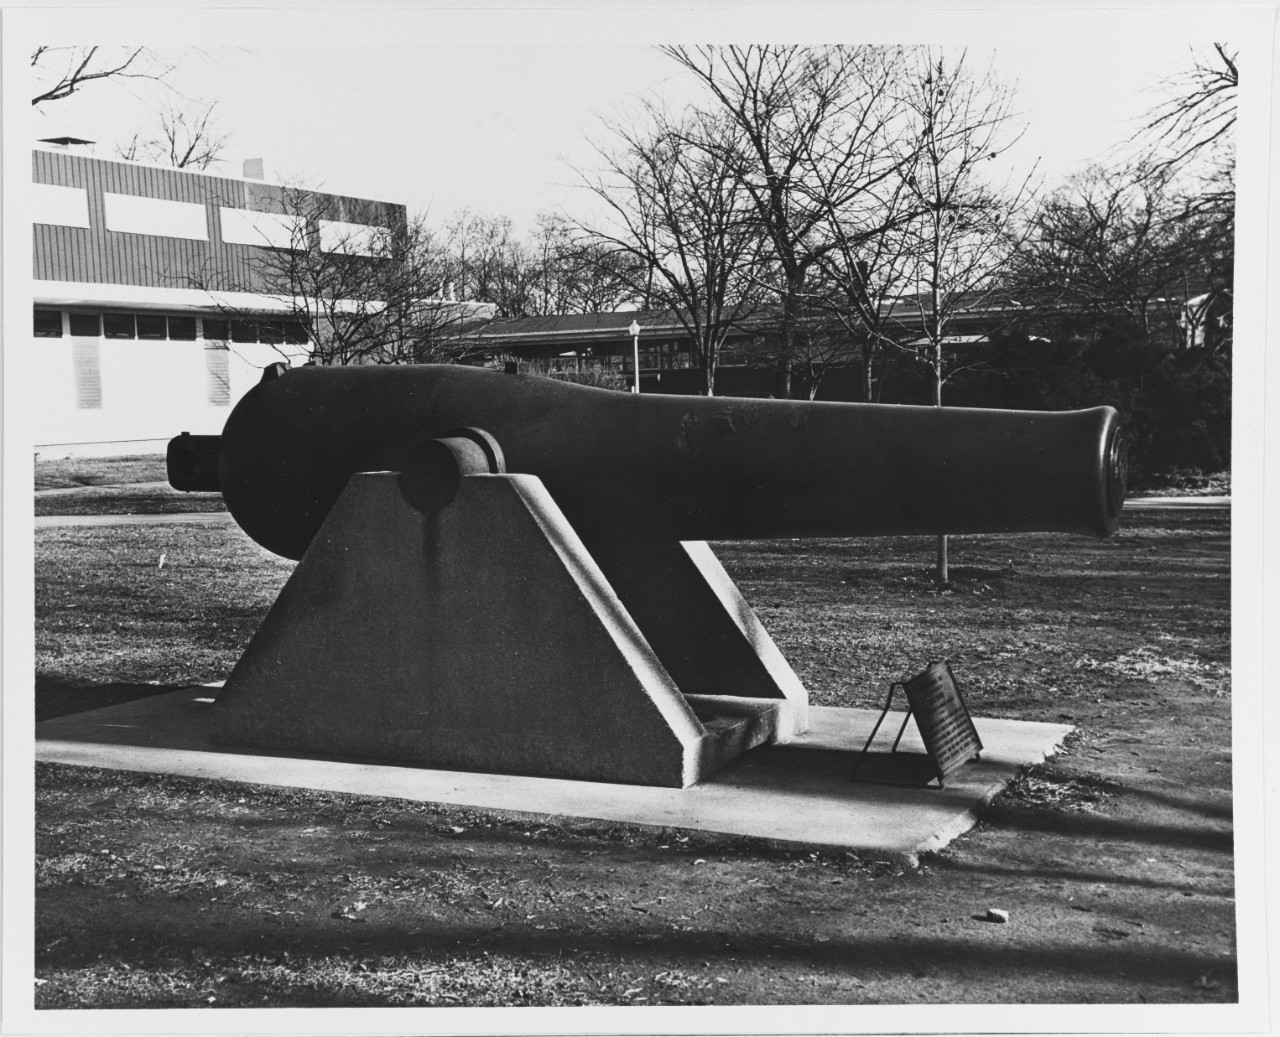 Dahlgren Gun at U.S. Naval Training Center, Great Lakes, Illinois